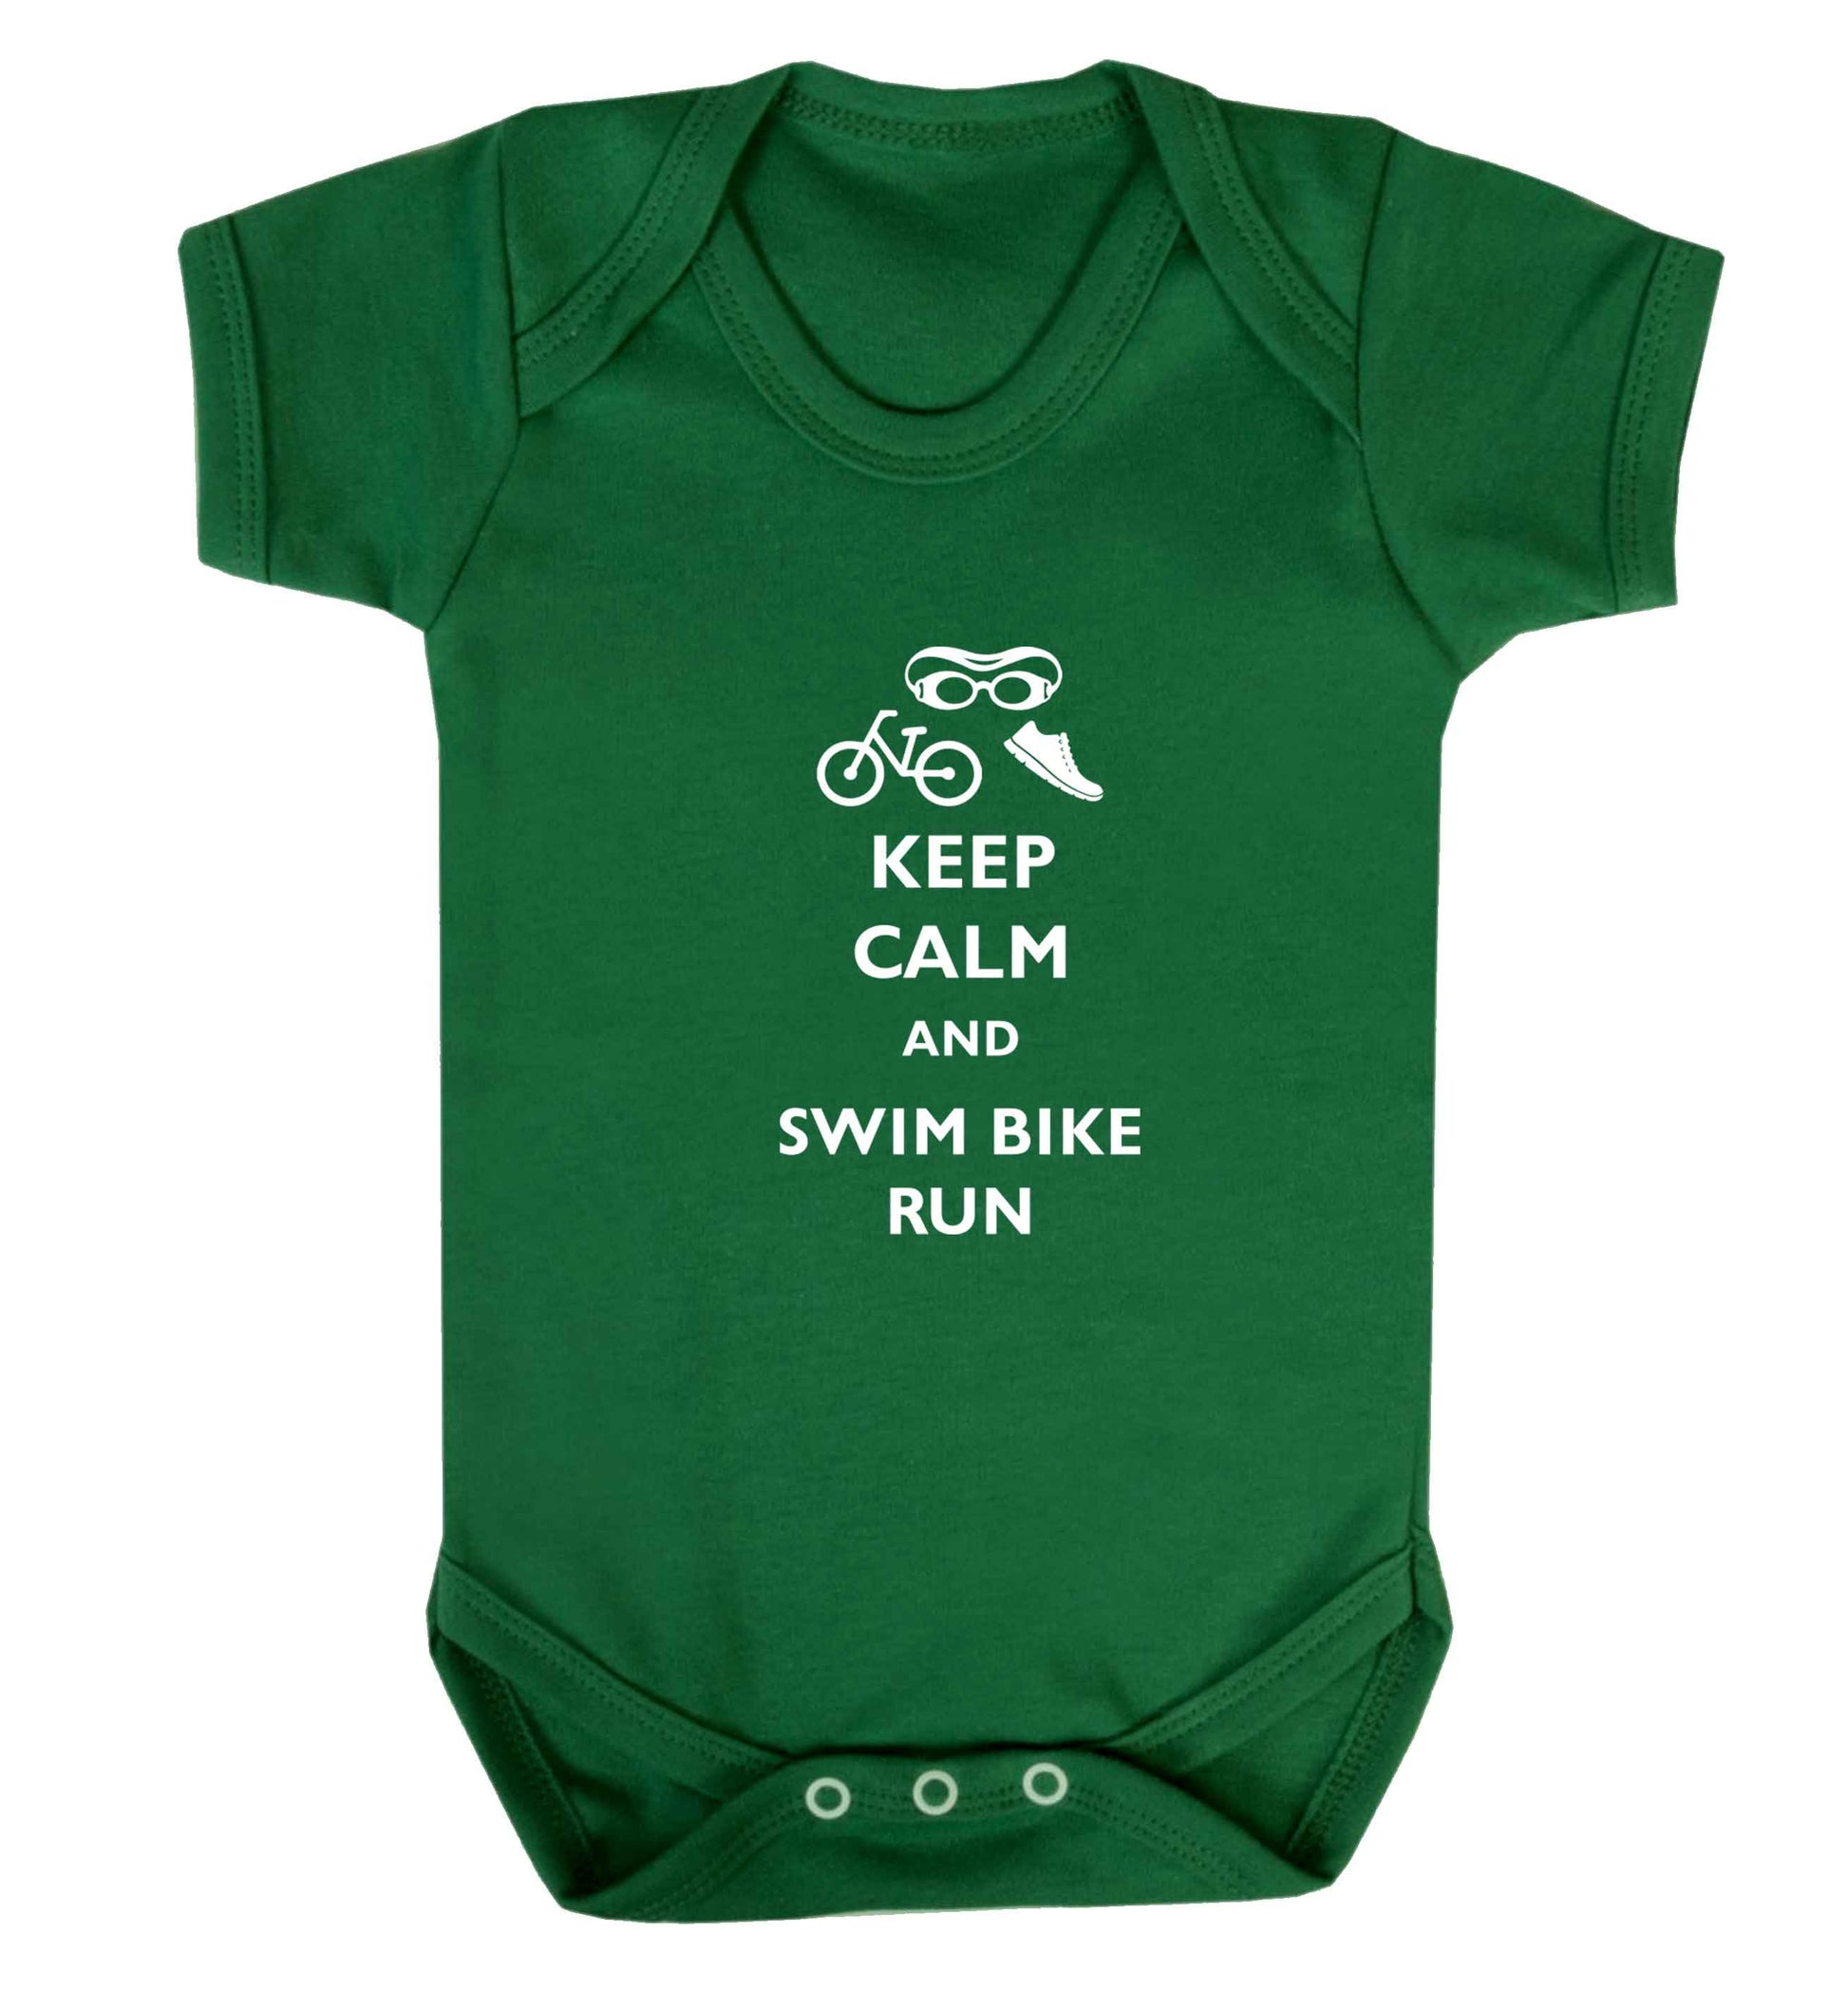 Keep calm and swim bike run baby vest green 18-24 months